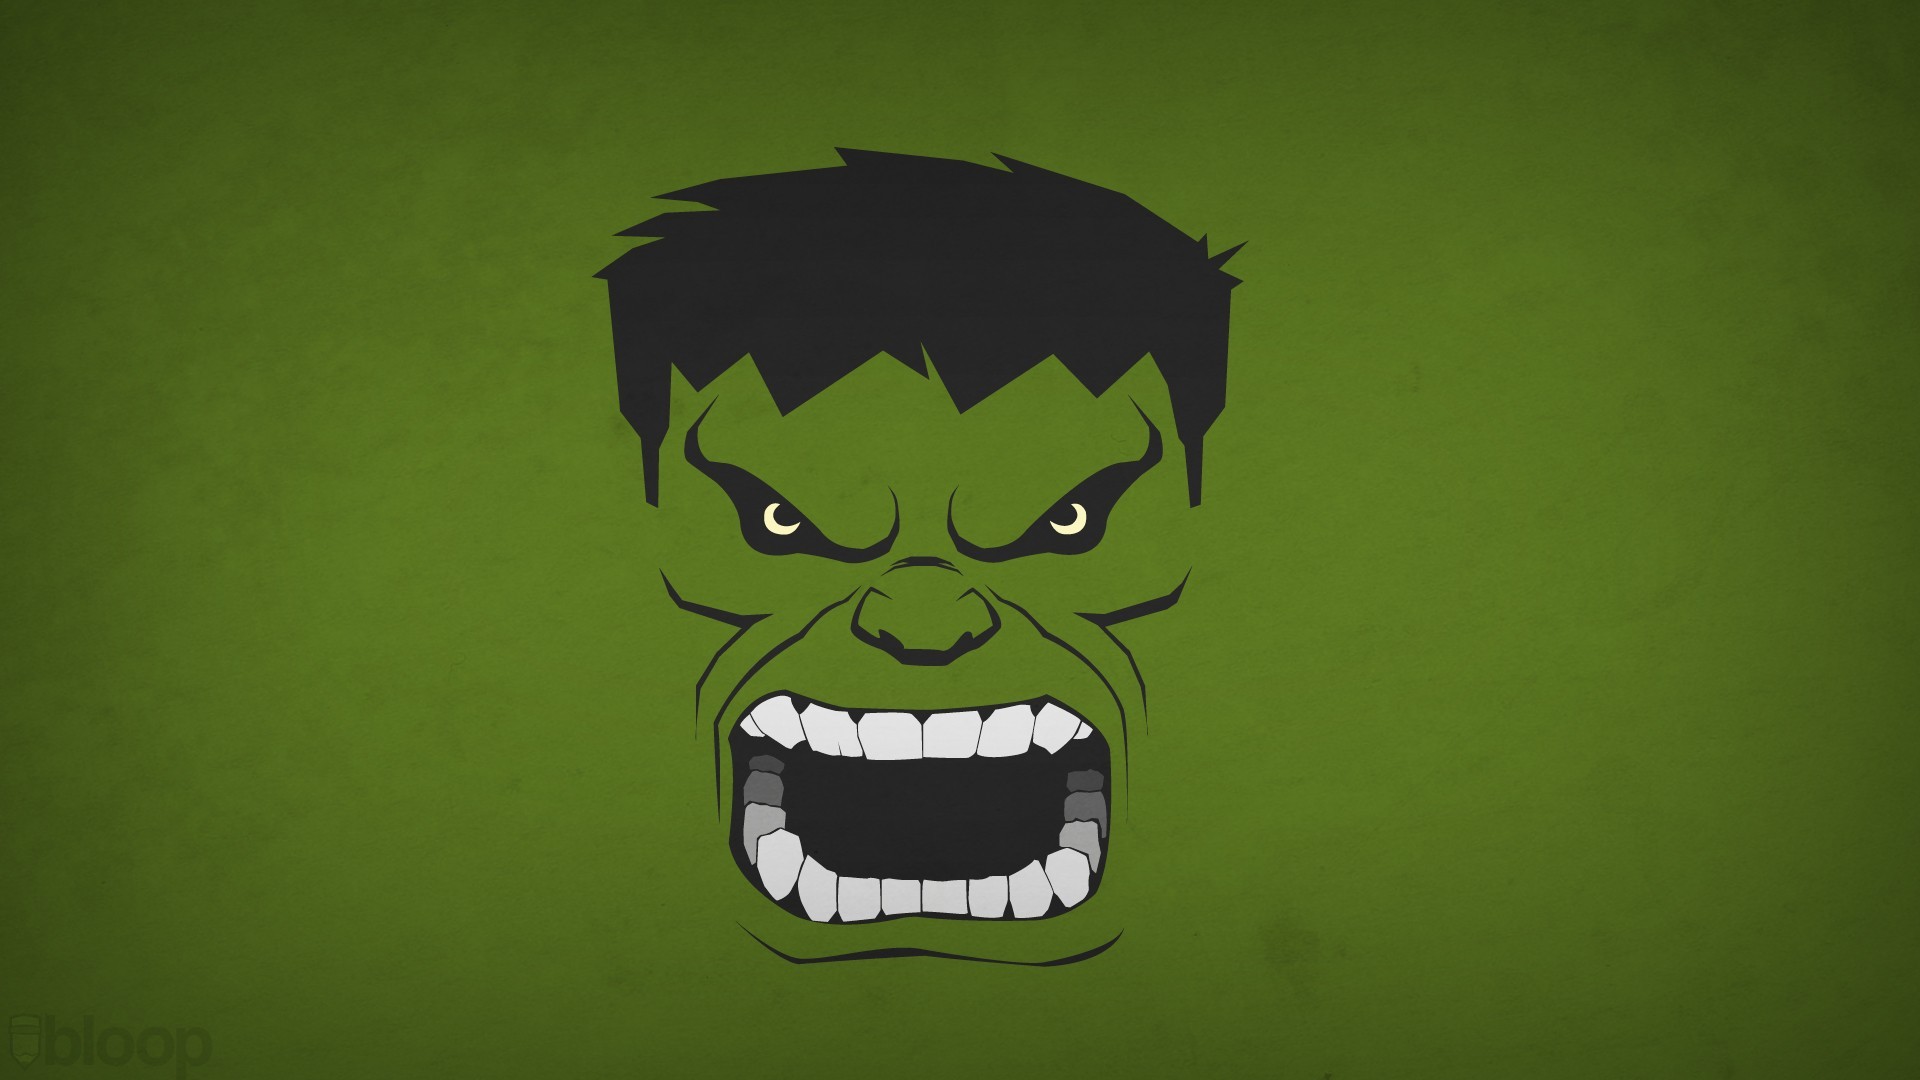 Hulk comic character superheroes Marvel Comics green background